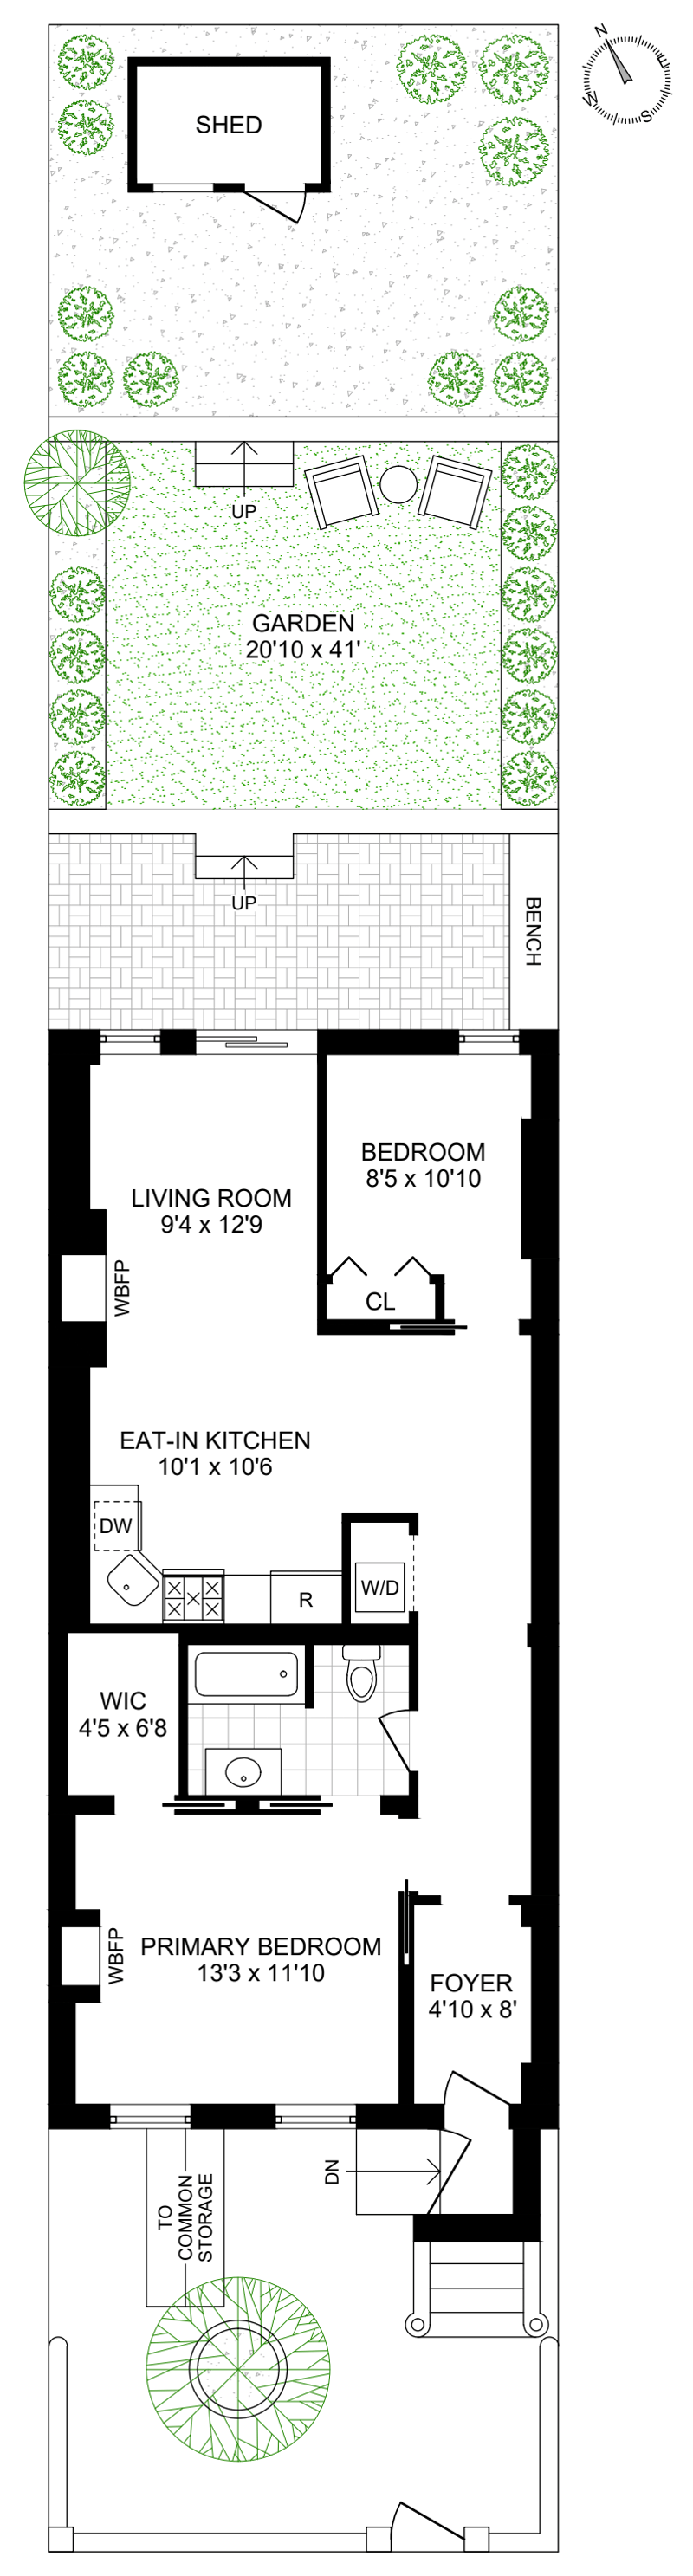 Floorplan for 89 Dean Street, 1